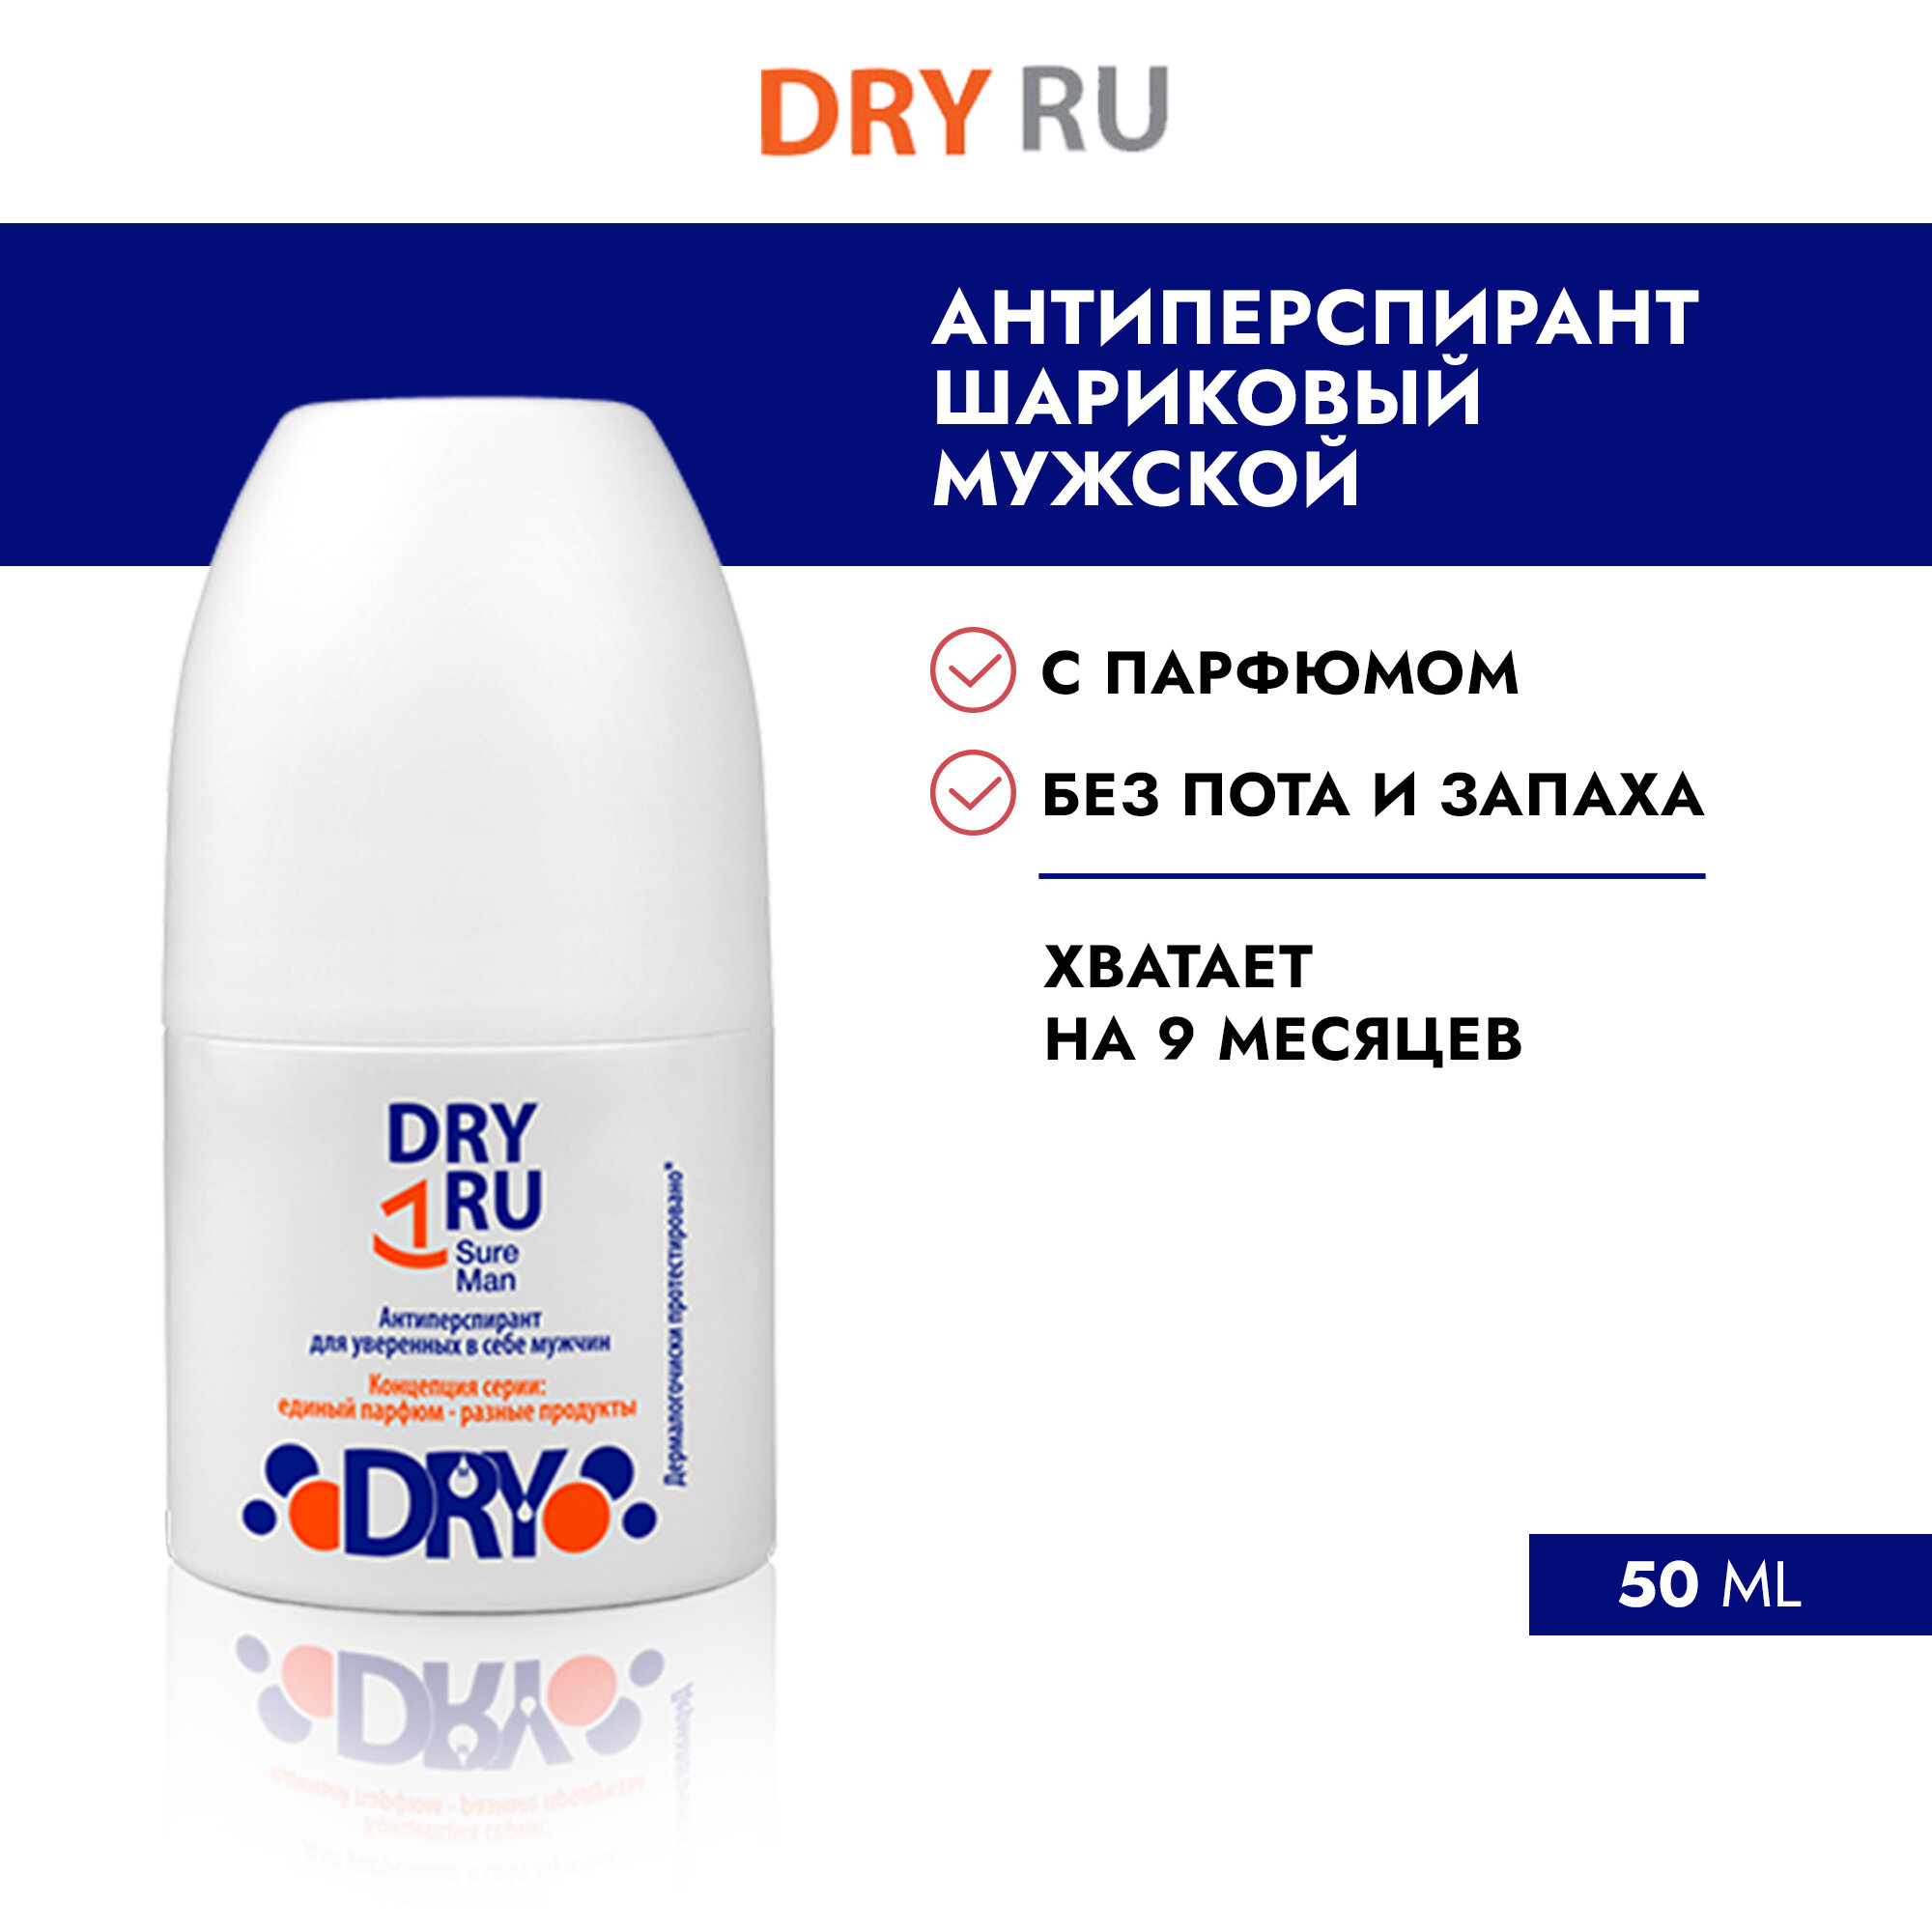 Dry RU Sure Man / Драй РУ Шуэ Мен, 50 мл. – антиперспирант для уверенных в себе мужчин, шт